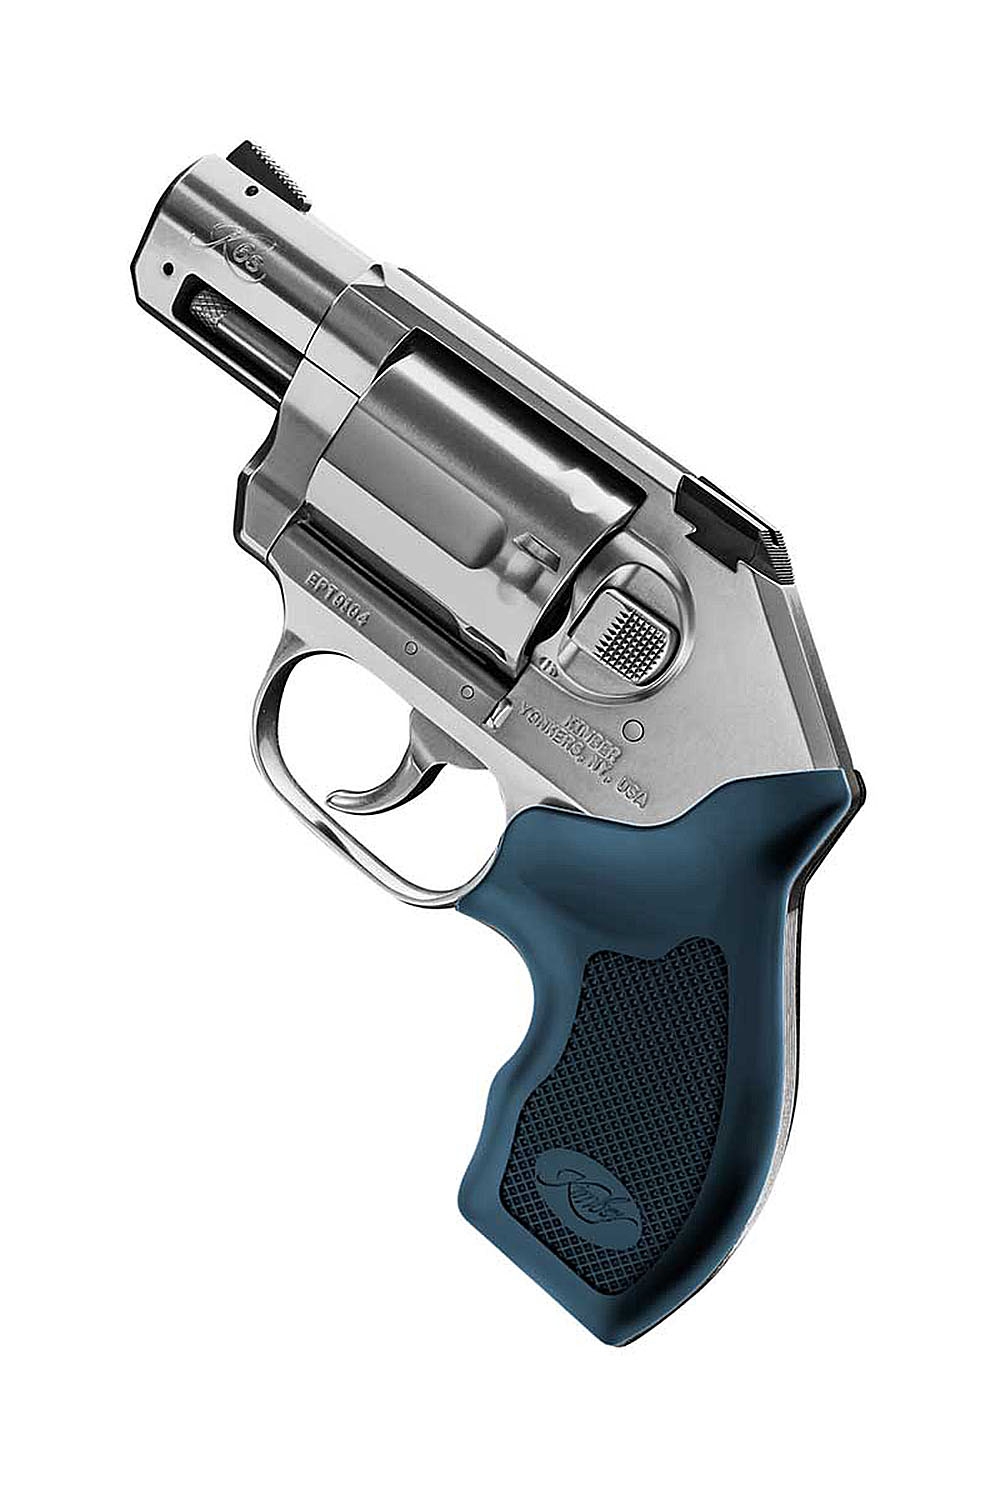 Revolver Kimber K6s calibro .357 Magnum